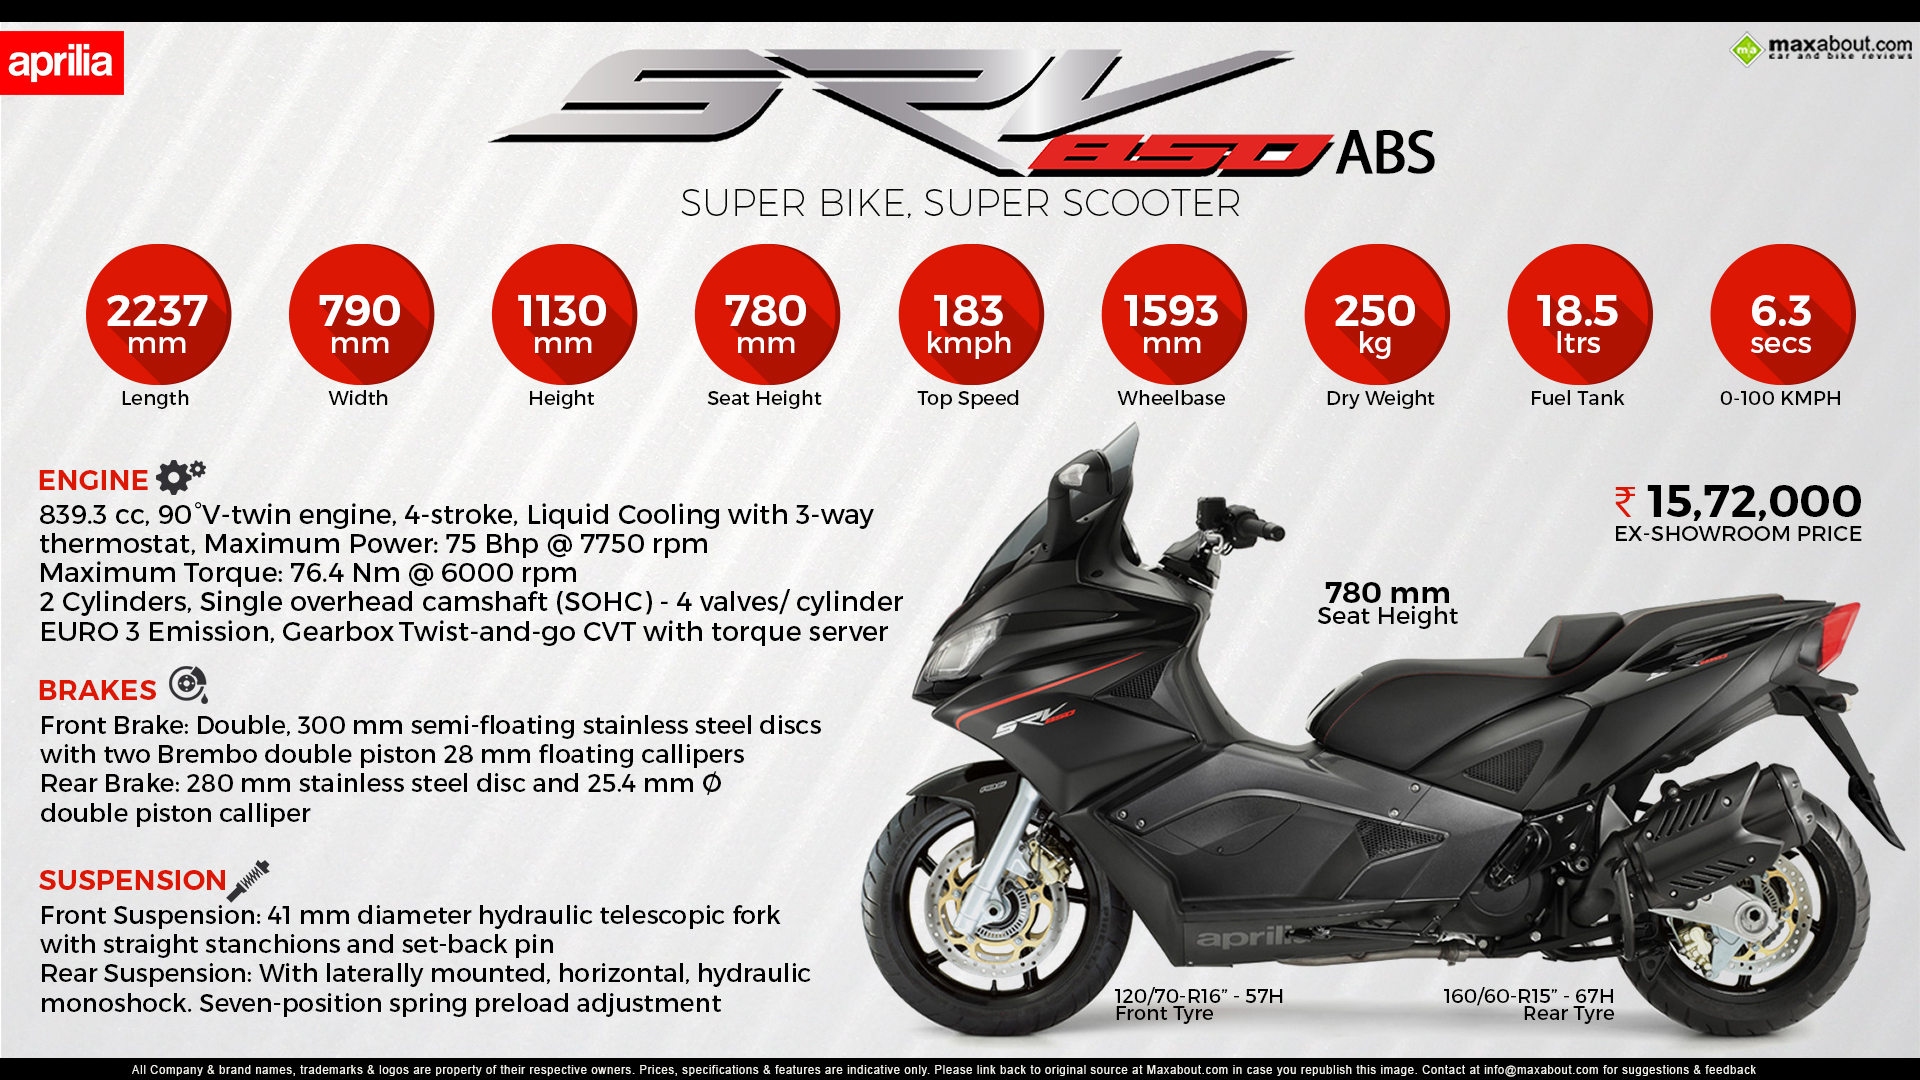 Aprilia SRV ABS - Super Bike, Super Scooter